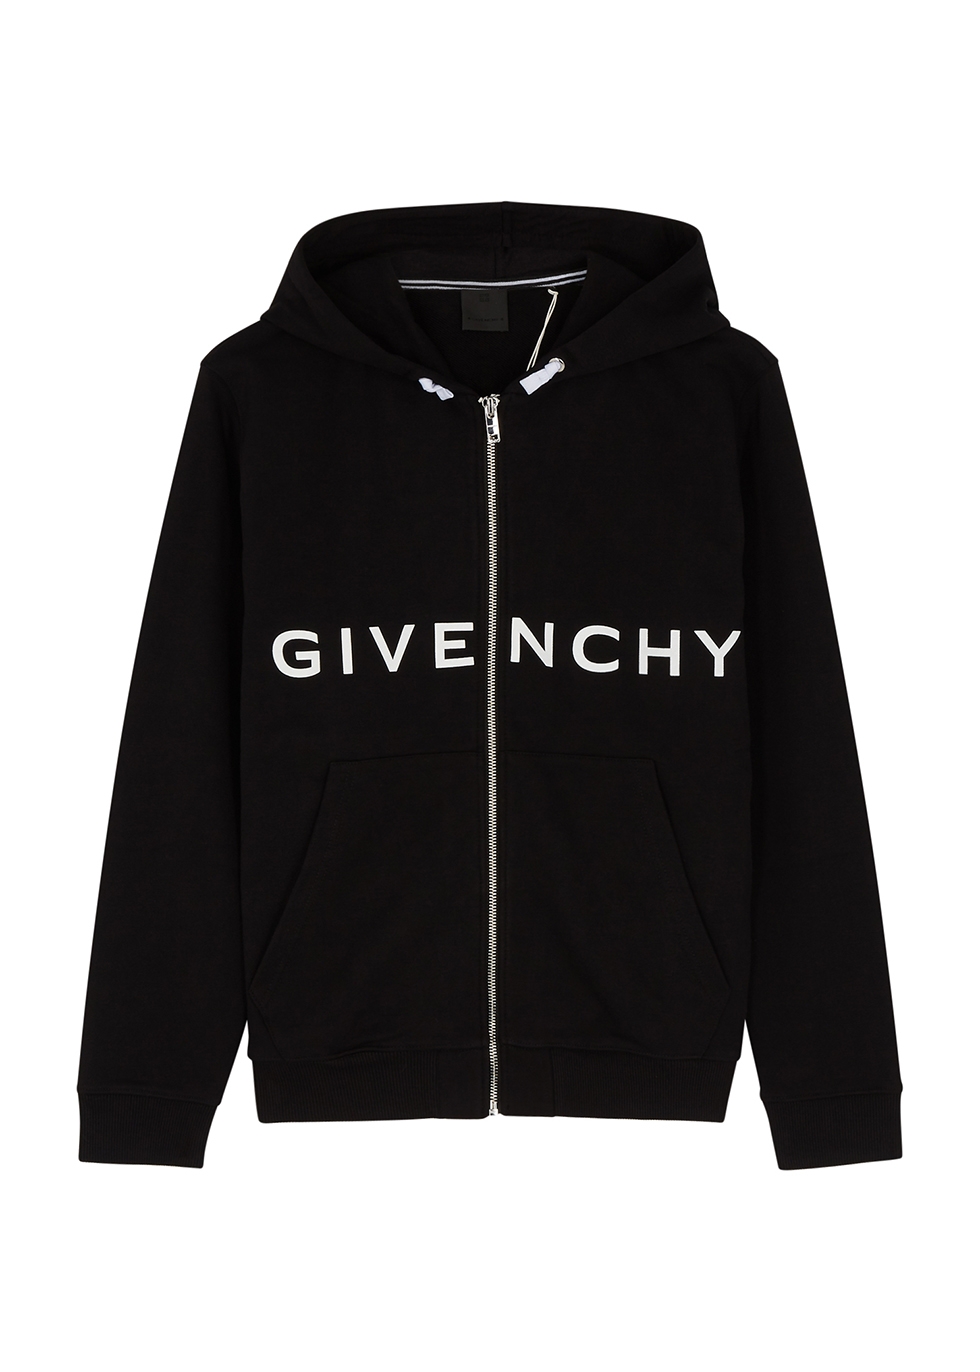 Givenchy KIDS Black logo hooded jersey sweatshirt (14 years) - Harvey ...